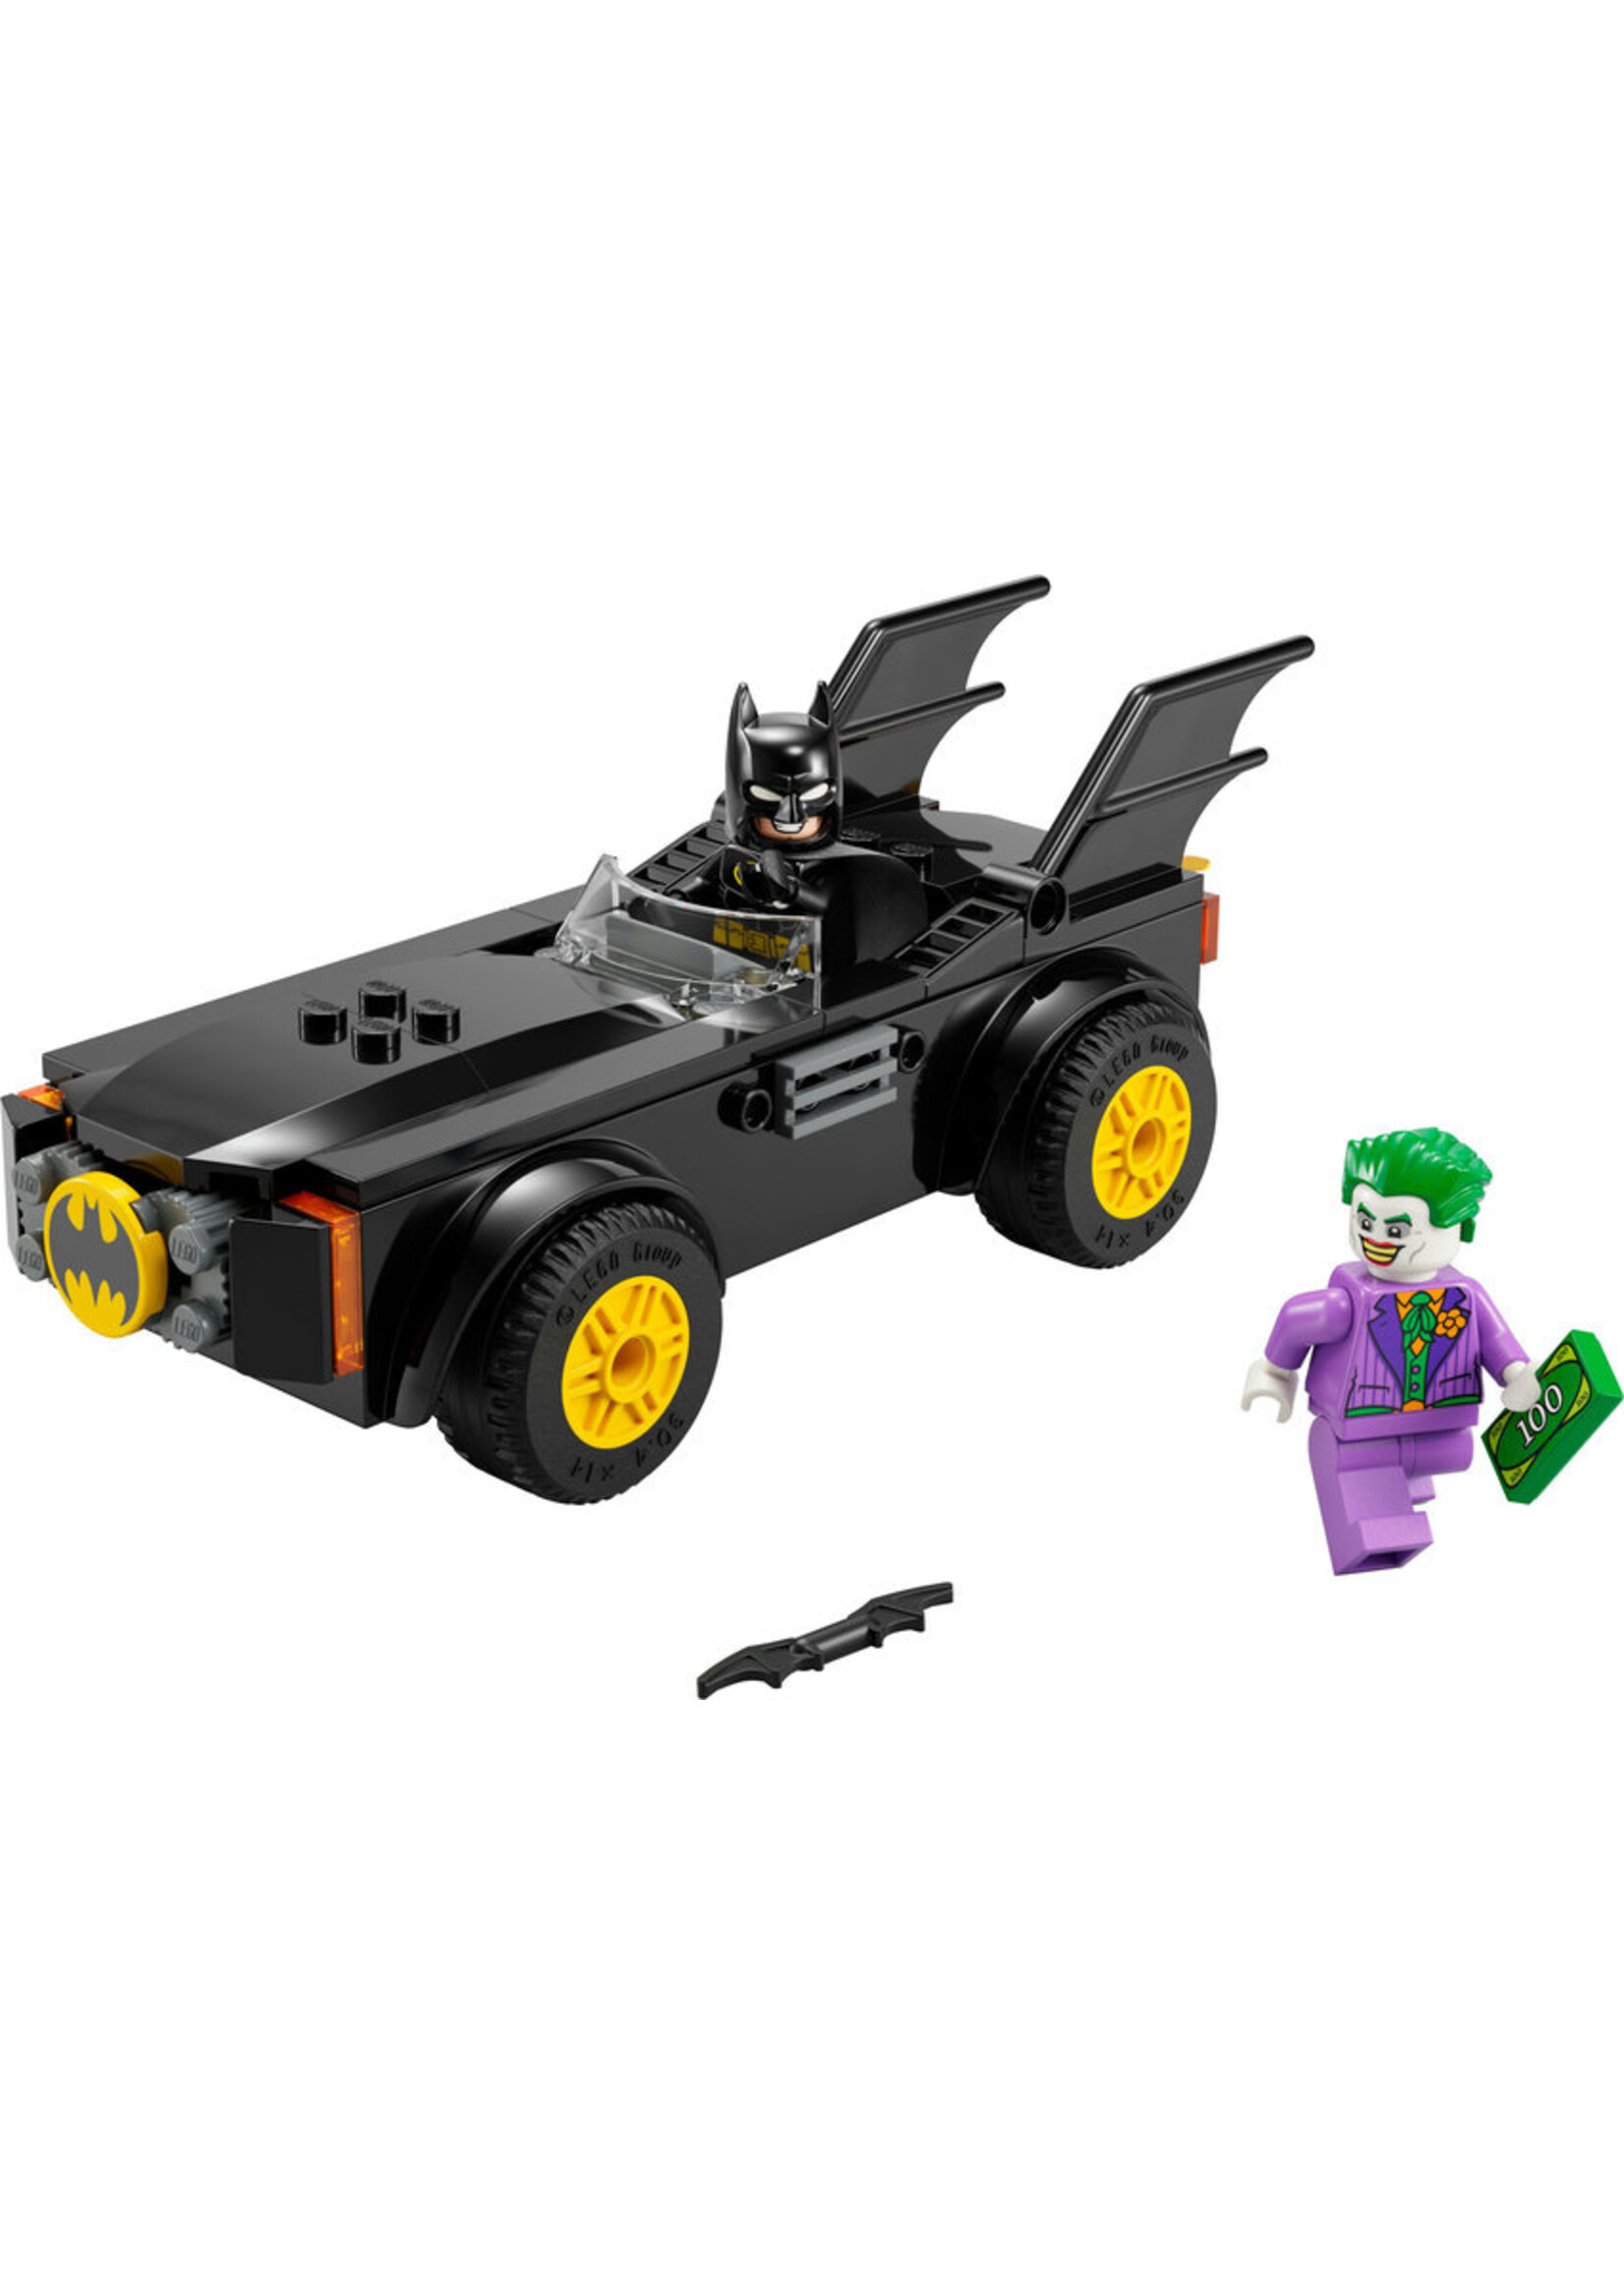 LEGO 76264 - Batmobile Pursuit: Batman vs The Joker